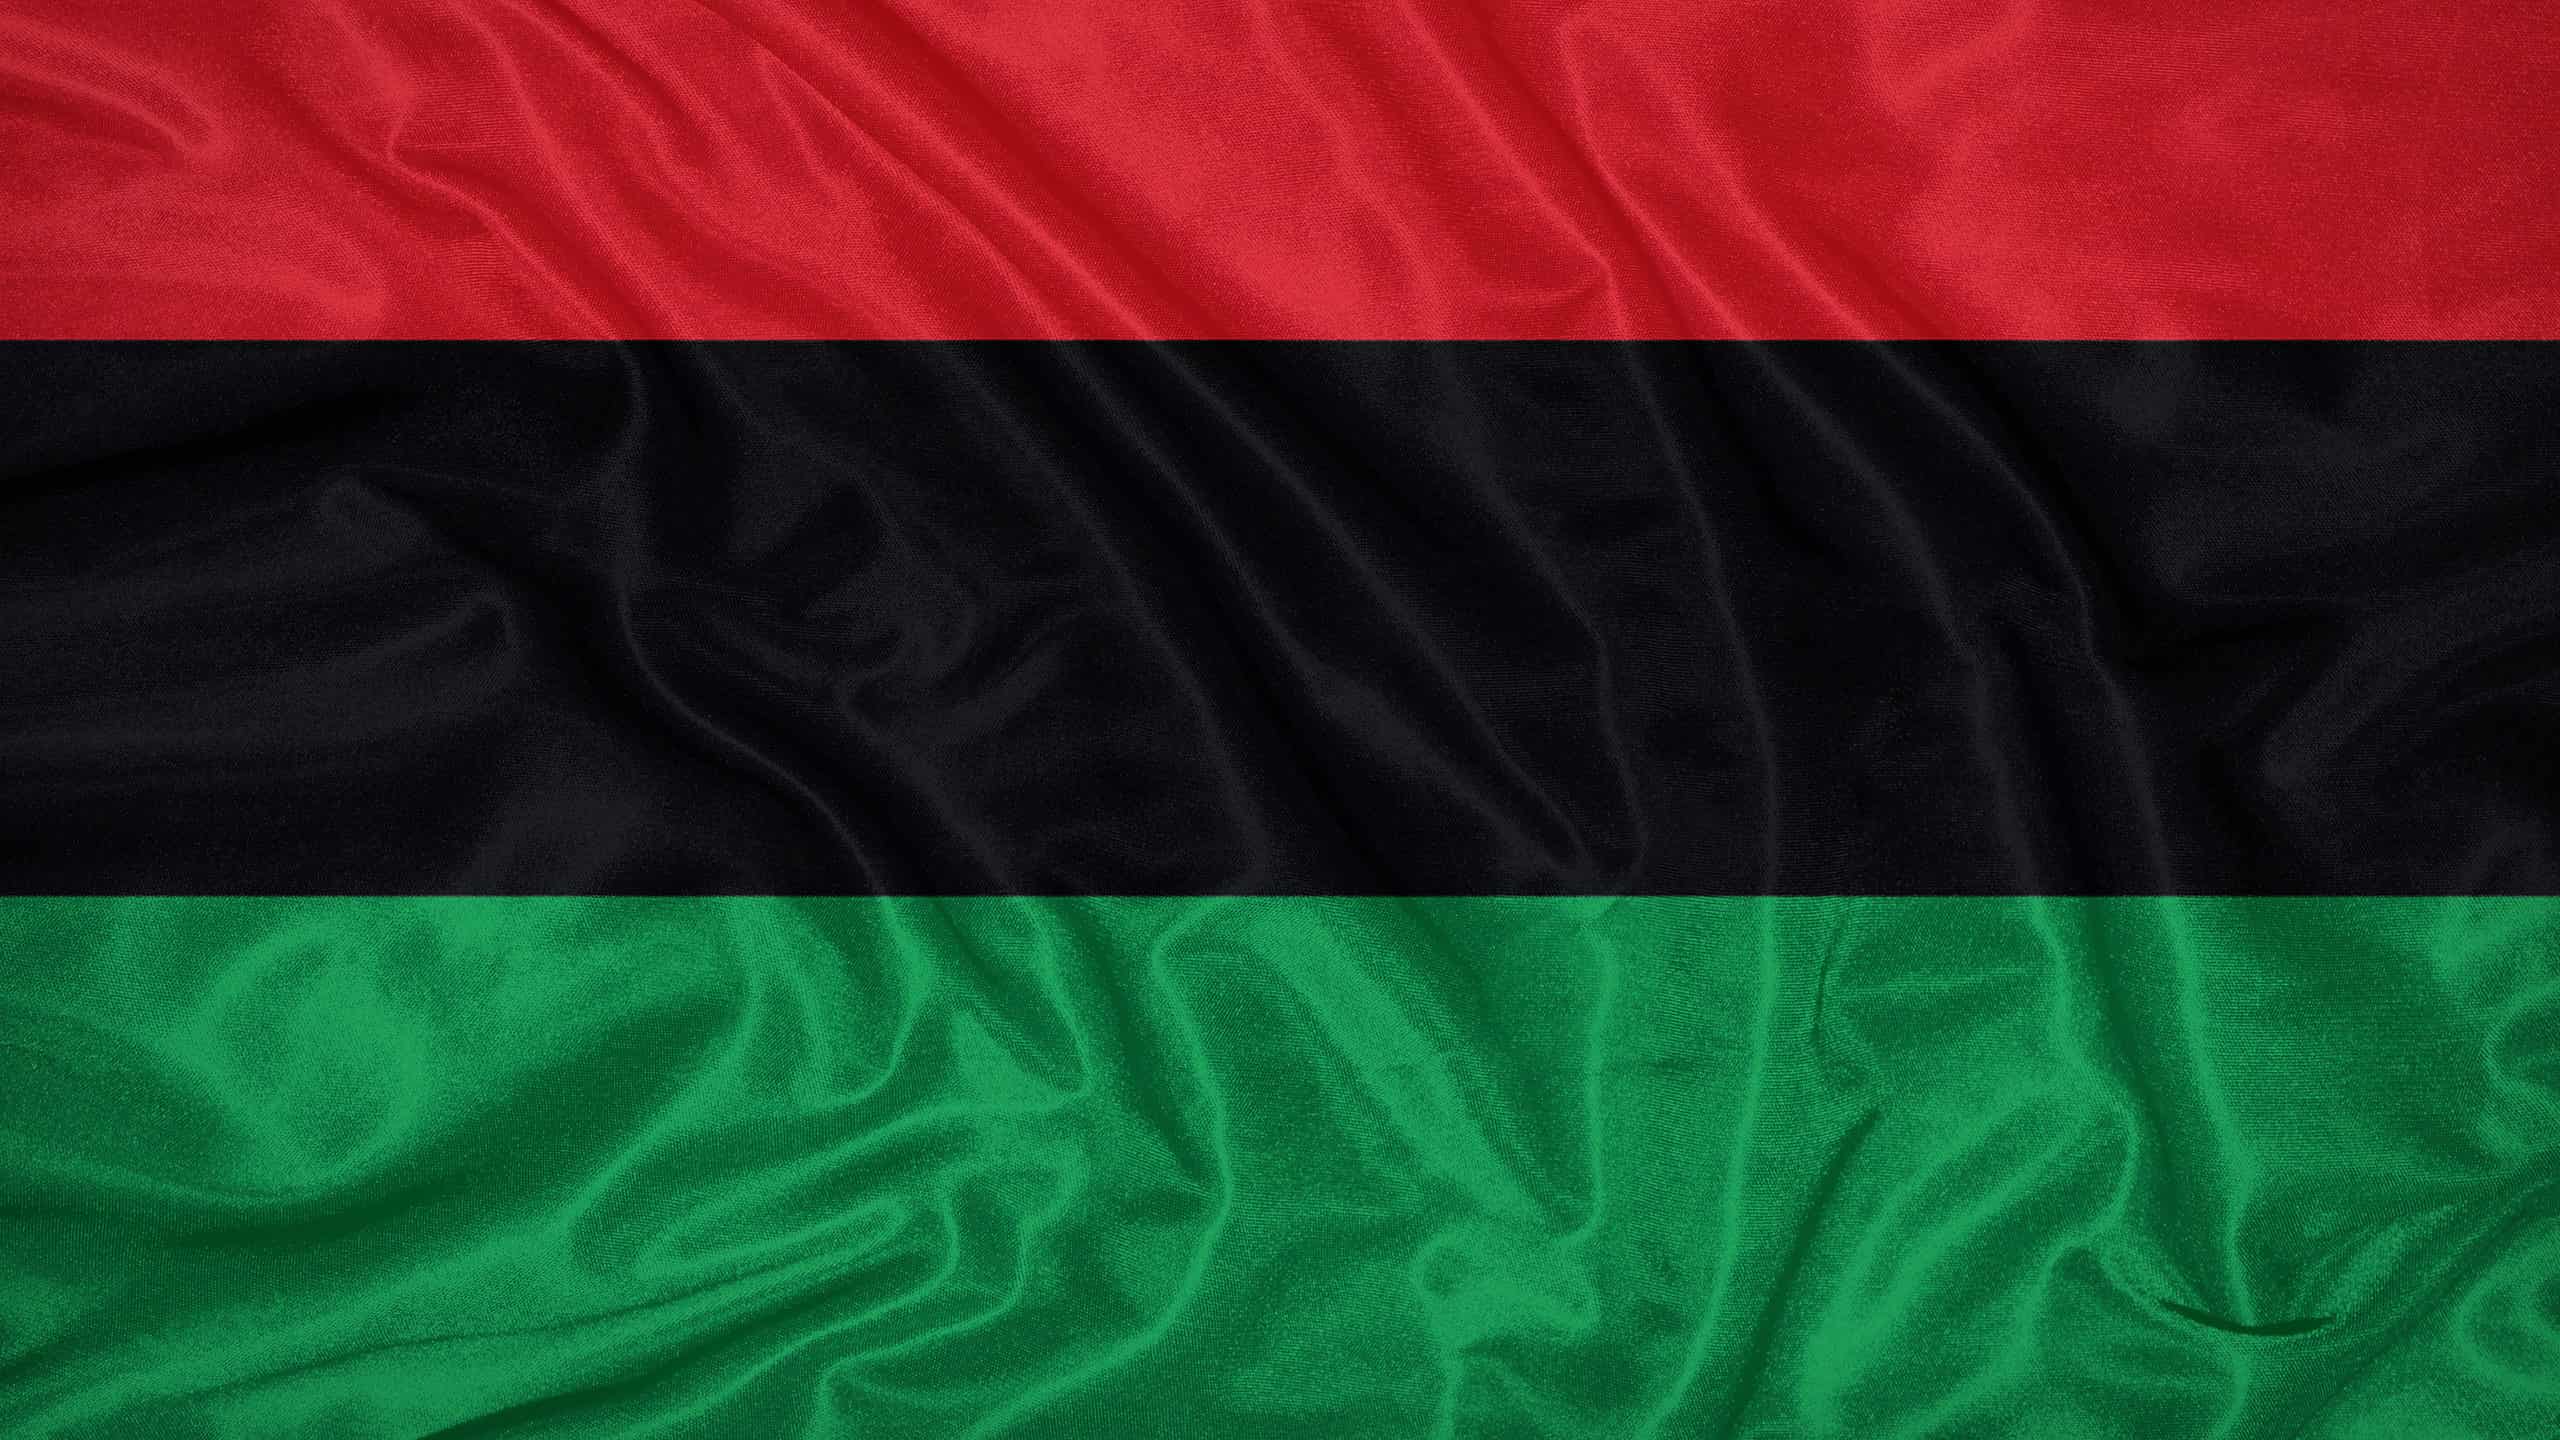 Pan African flag